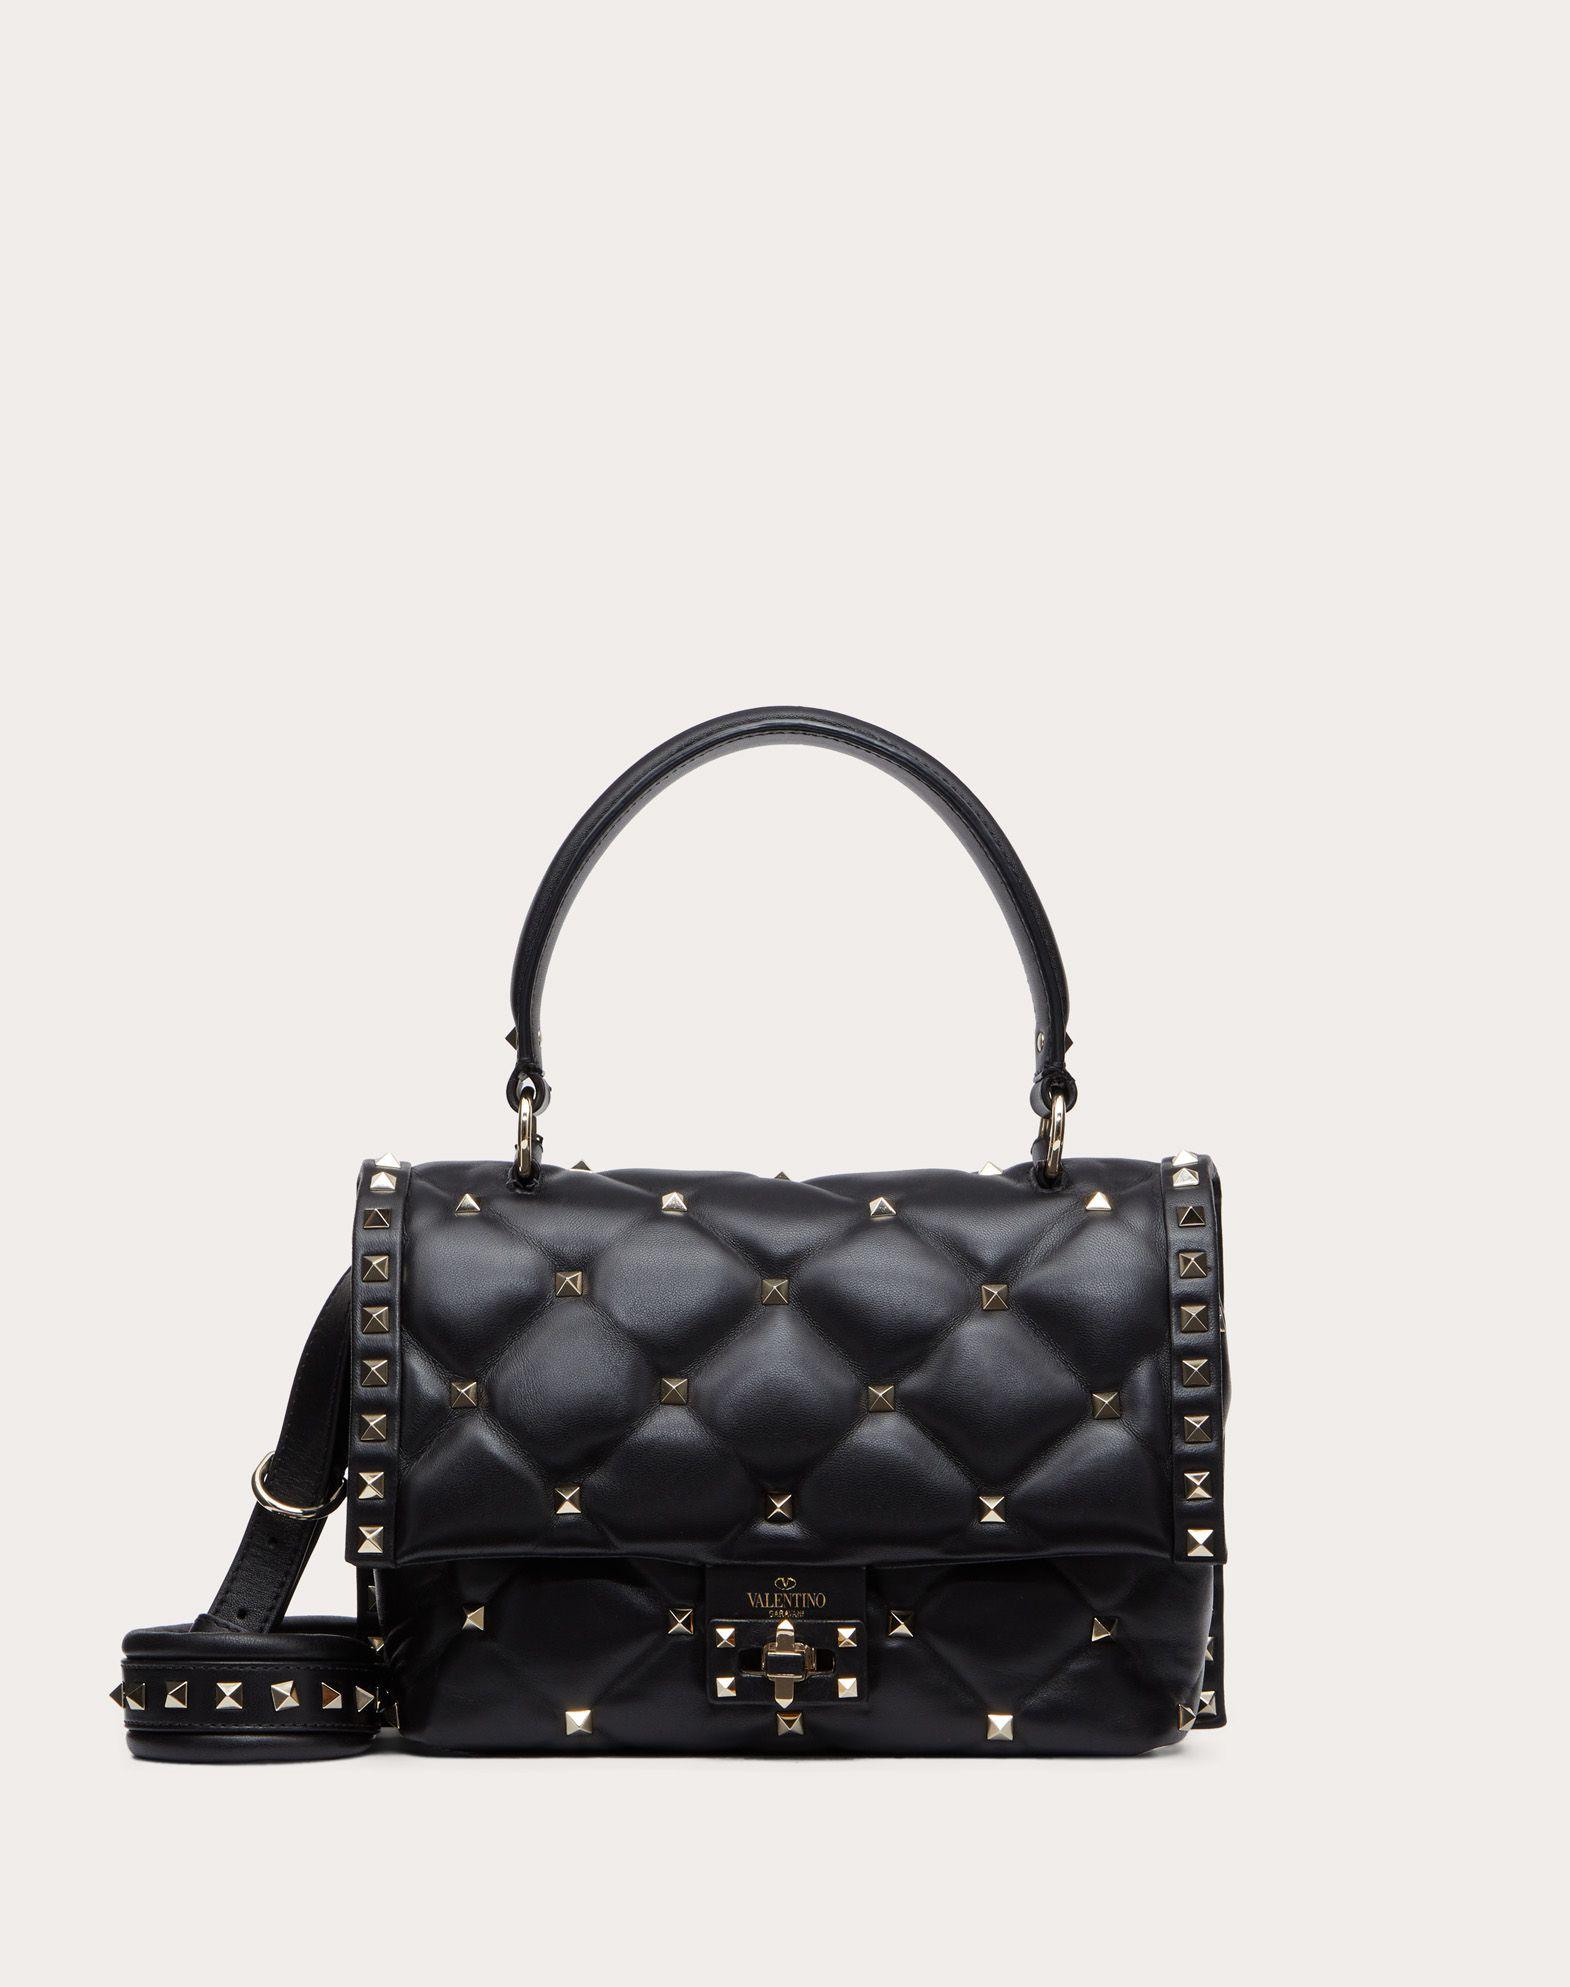 Valentino Leather Medium Candystud Top-handle Bag in Black - Lyst